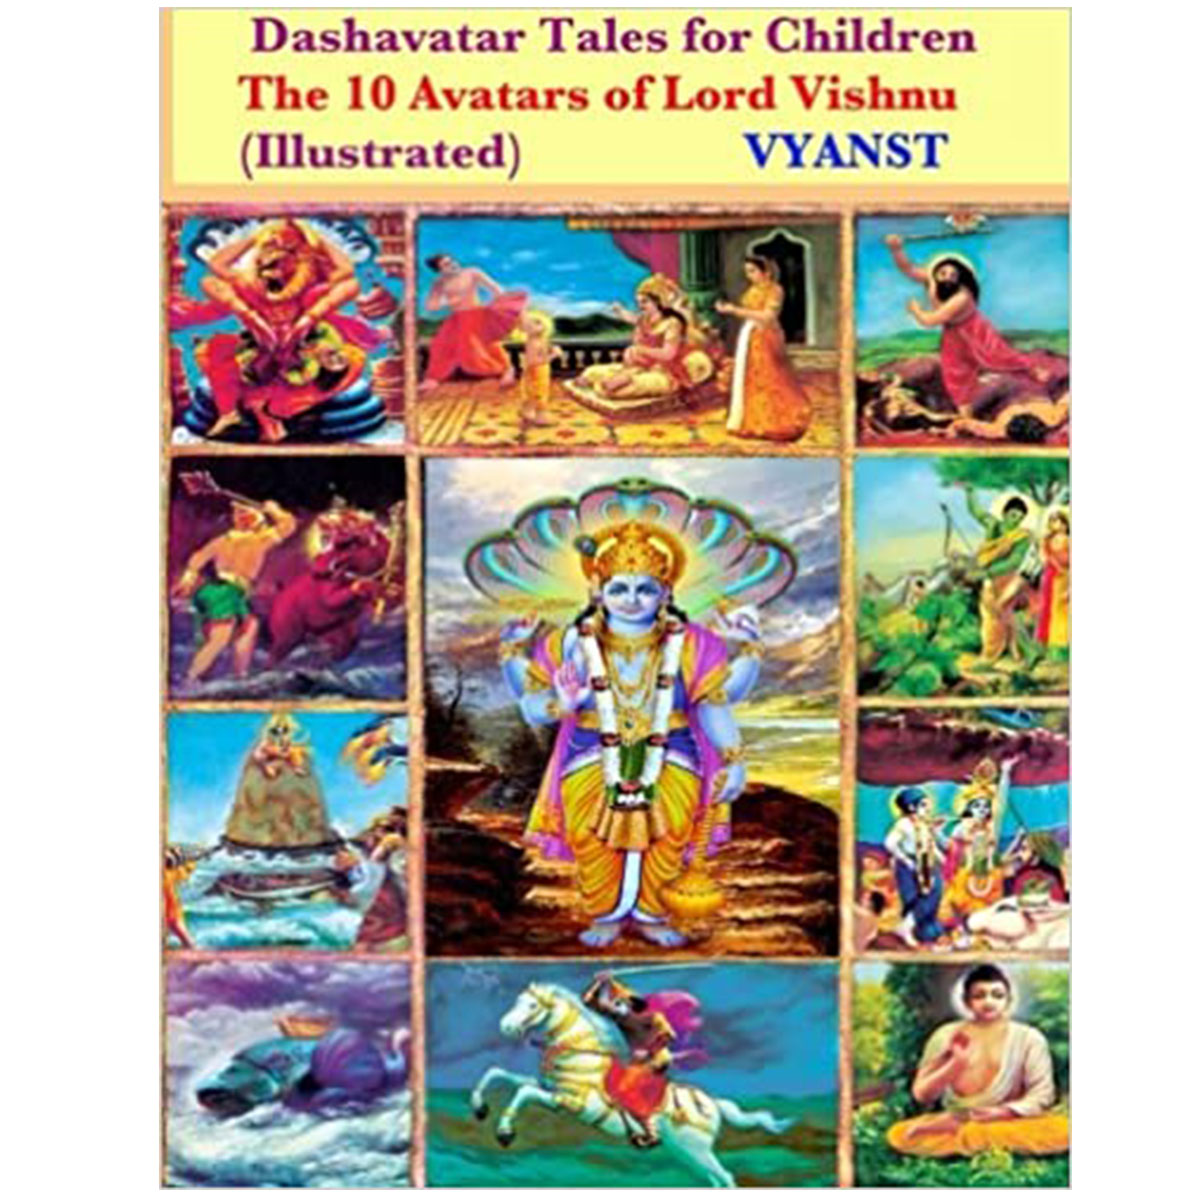 The 10 Avatars of Vishnu Stories of Their Divine Powers and Miracles   Svastika